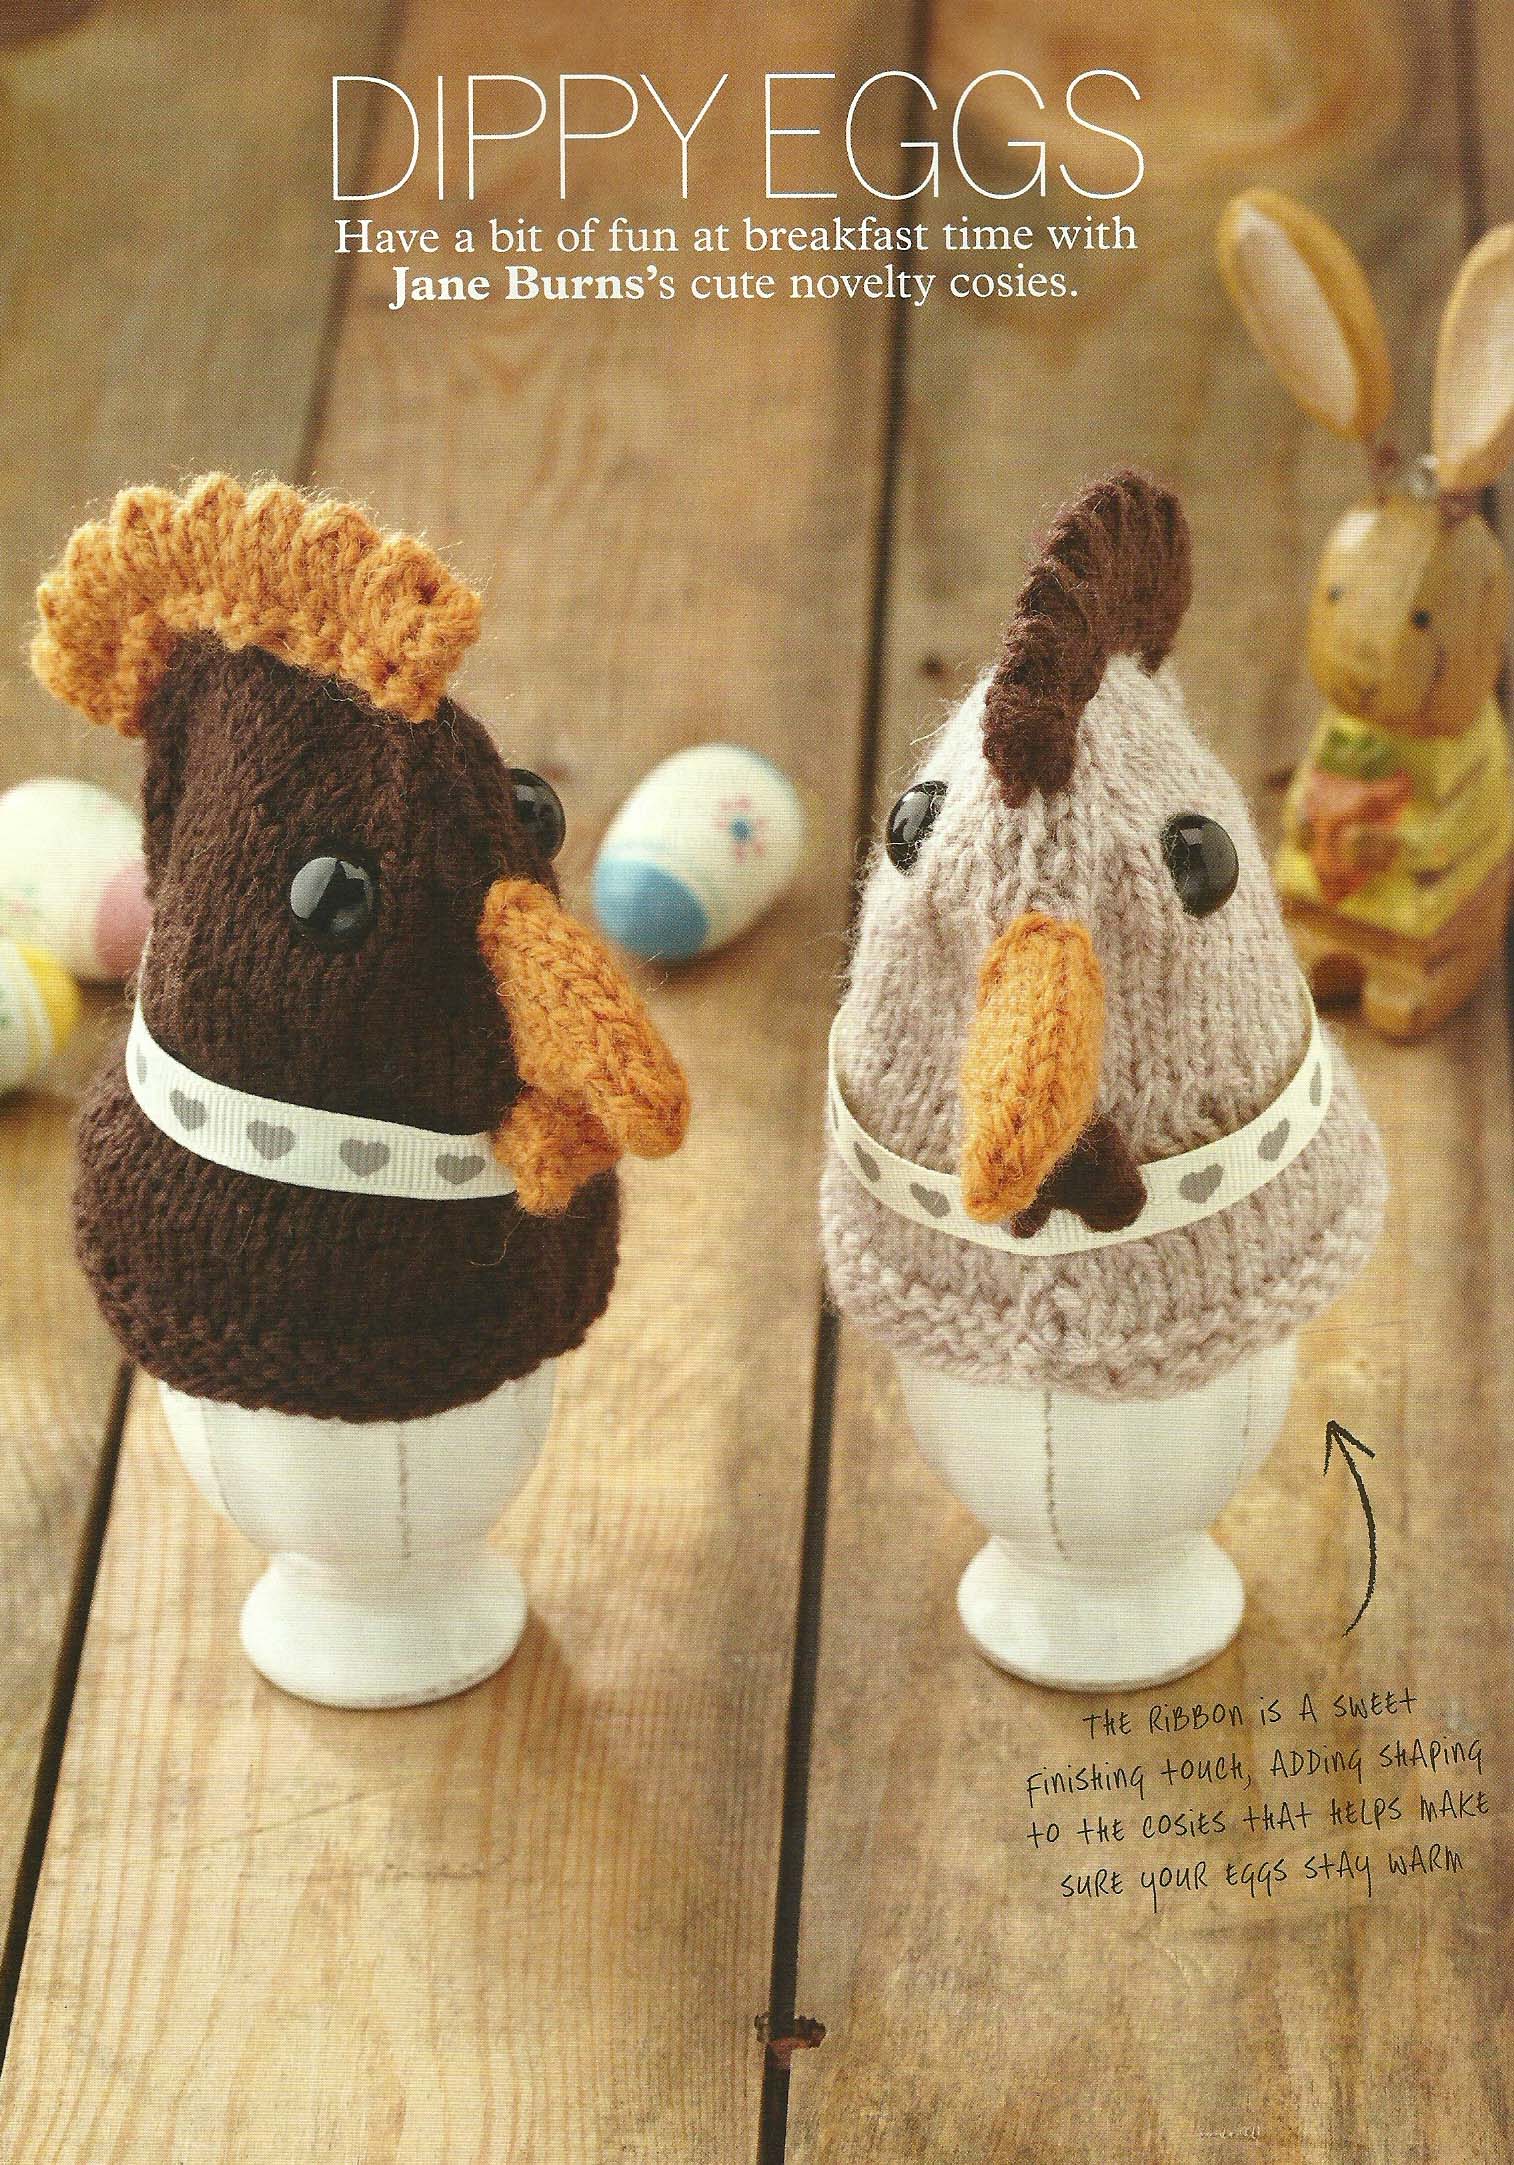 dippy eggs egg cosy jane burns simply knitting